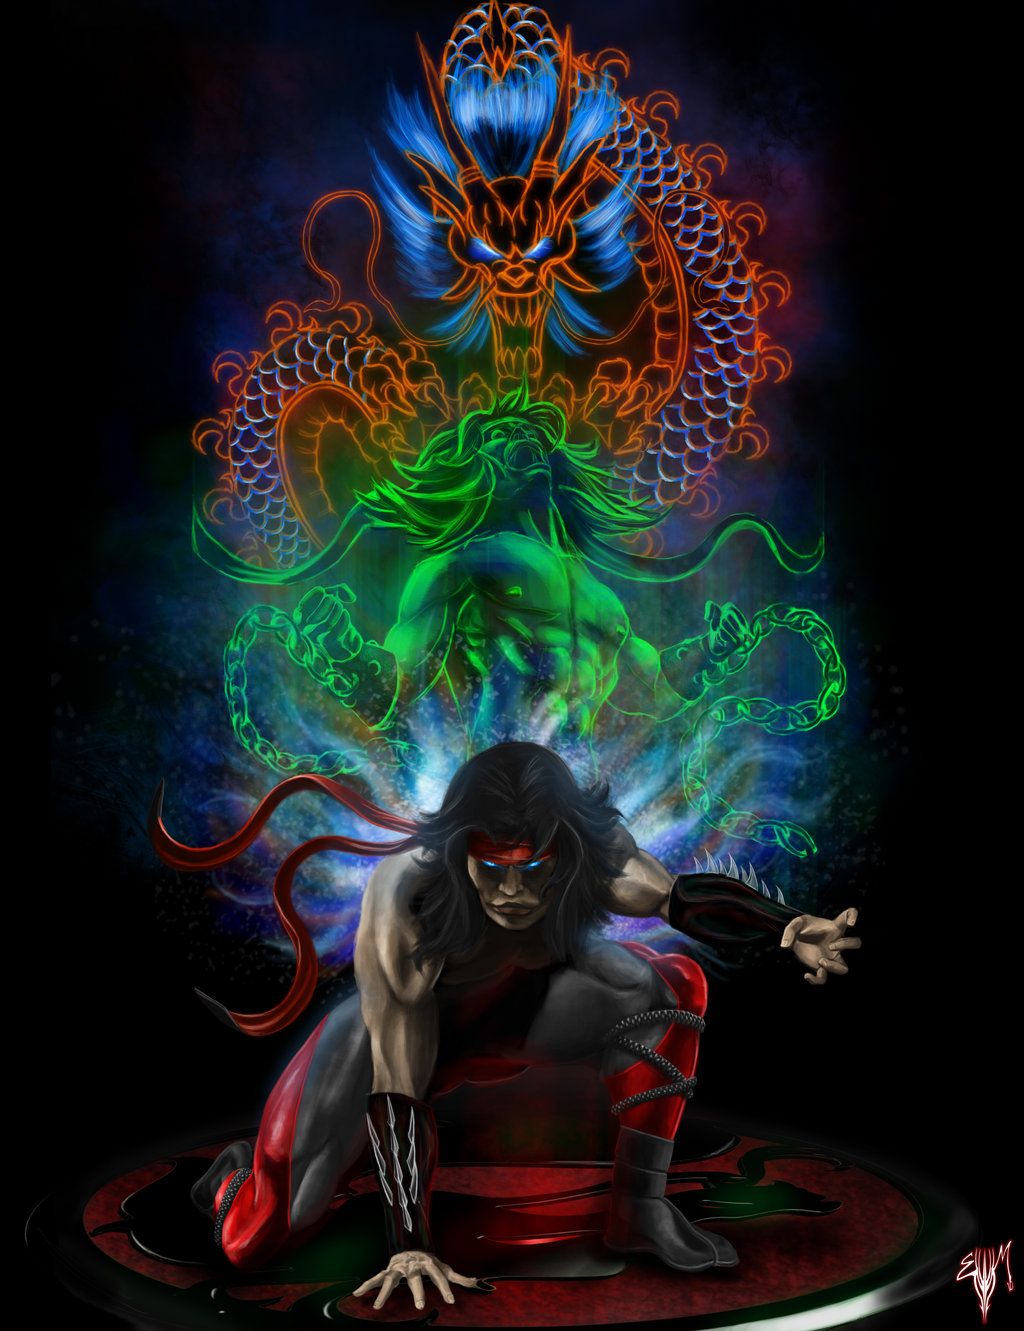 Liu Kang Wallpaper. Mortal Kombat Liu Kang Wallpaper, Amber Liu Wallpaper and High Heels Lucy Liu Wallpaper